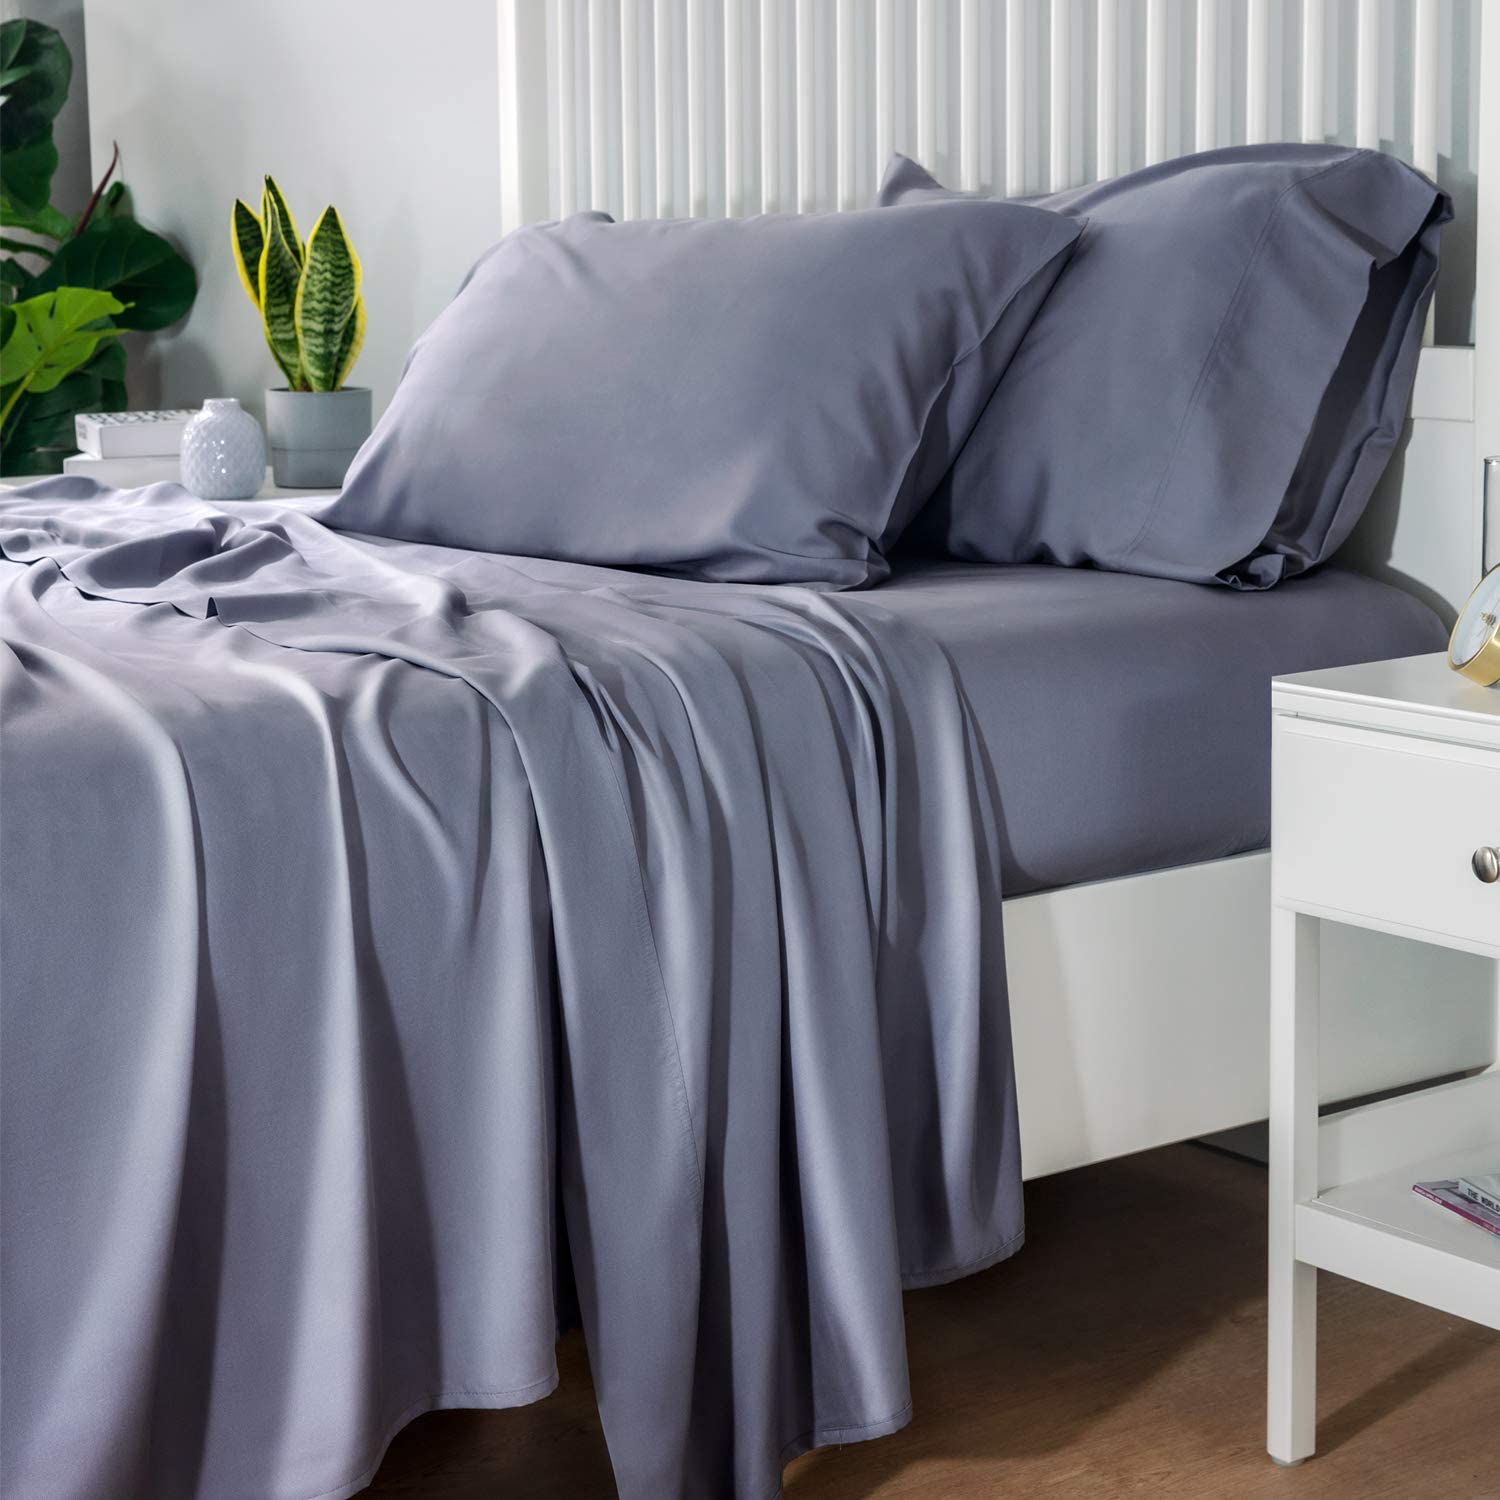 100% Organic Bamboo Cooling Bed Sheets Set Ultra Soft Luxury Deep Pocket Sheet 